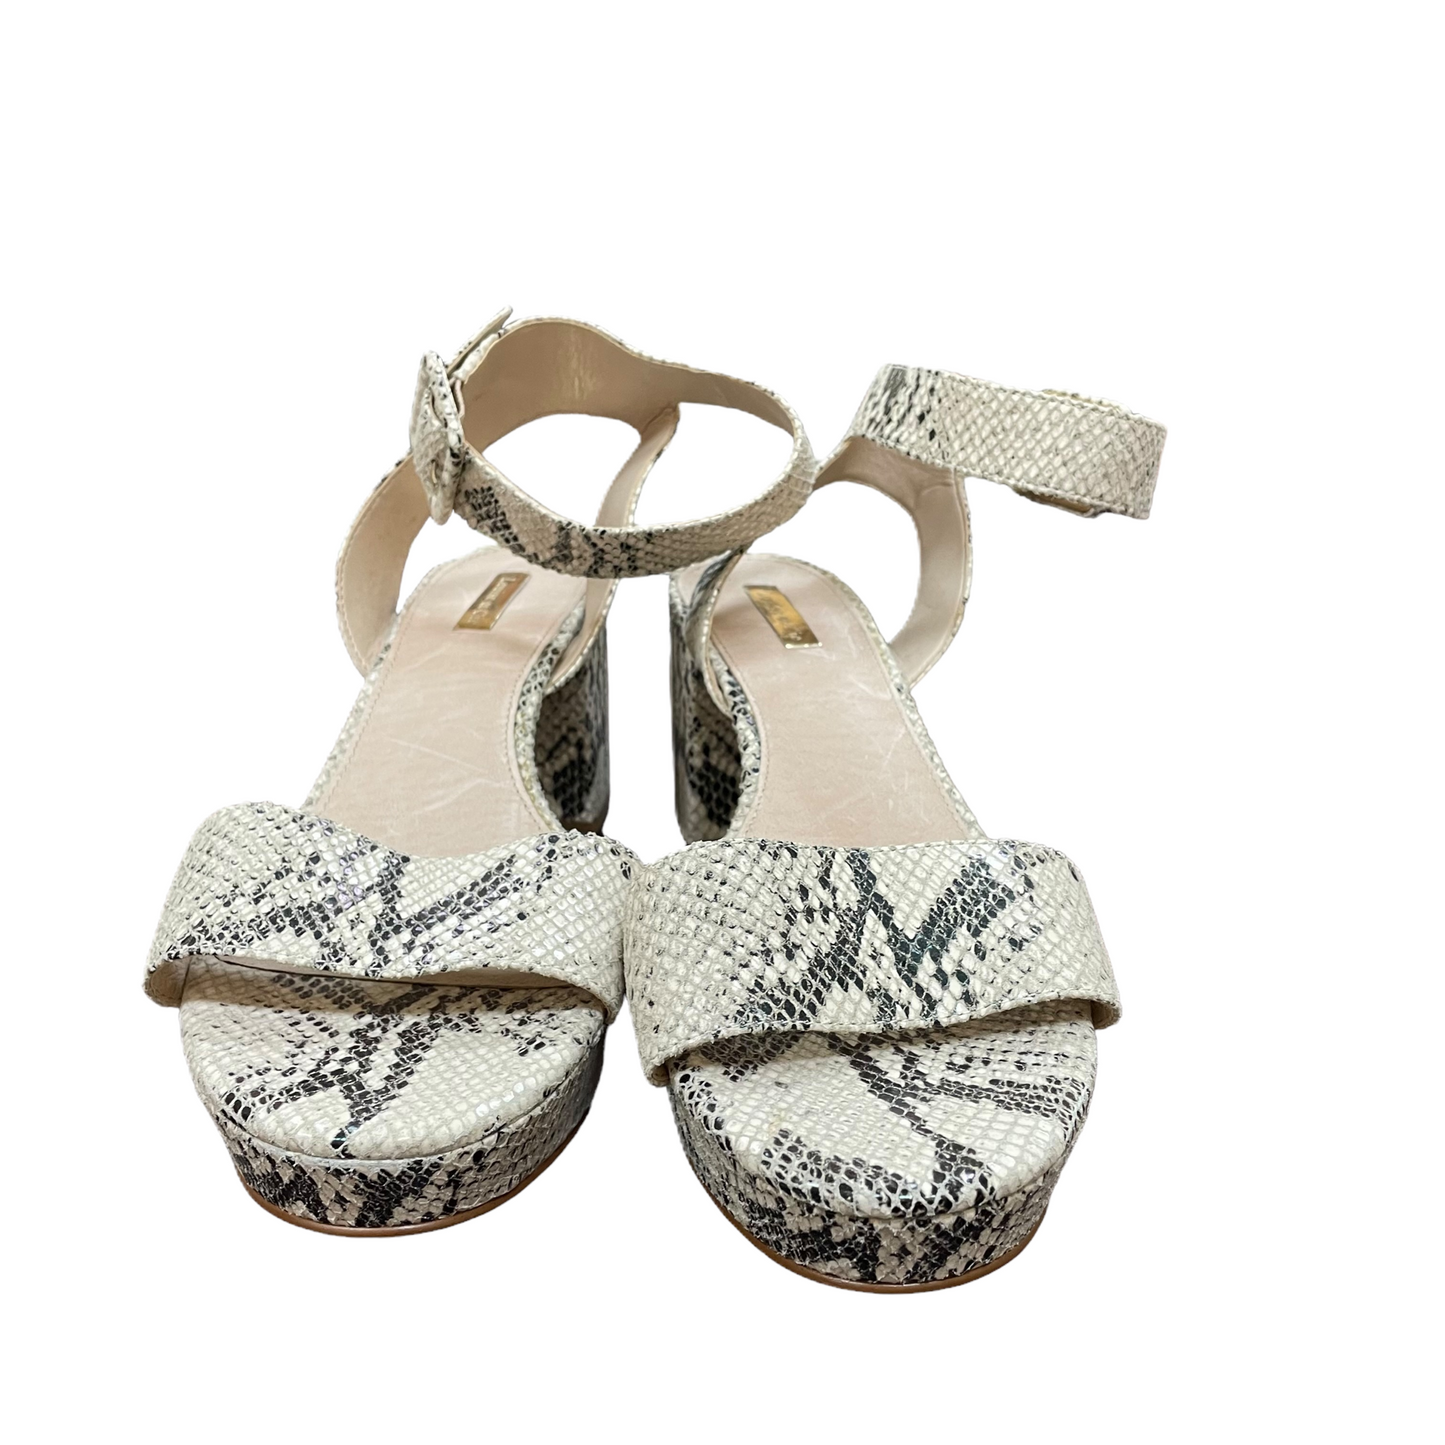 Snakeskin Print Sandals Heels Block By Louise Et Cie, Size: 11